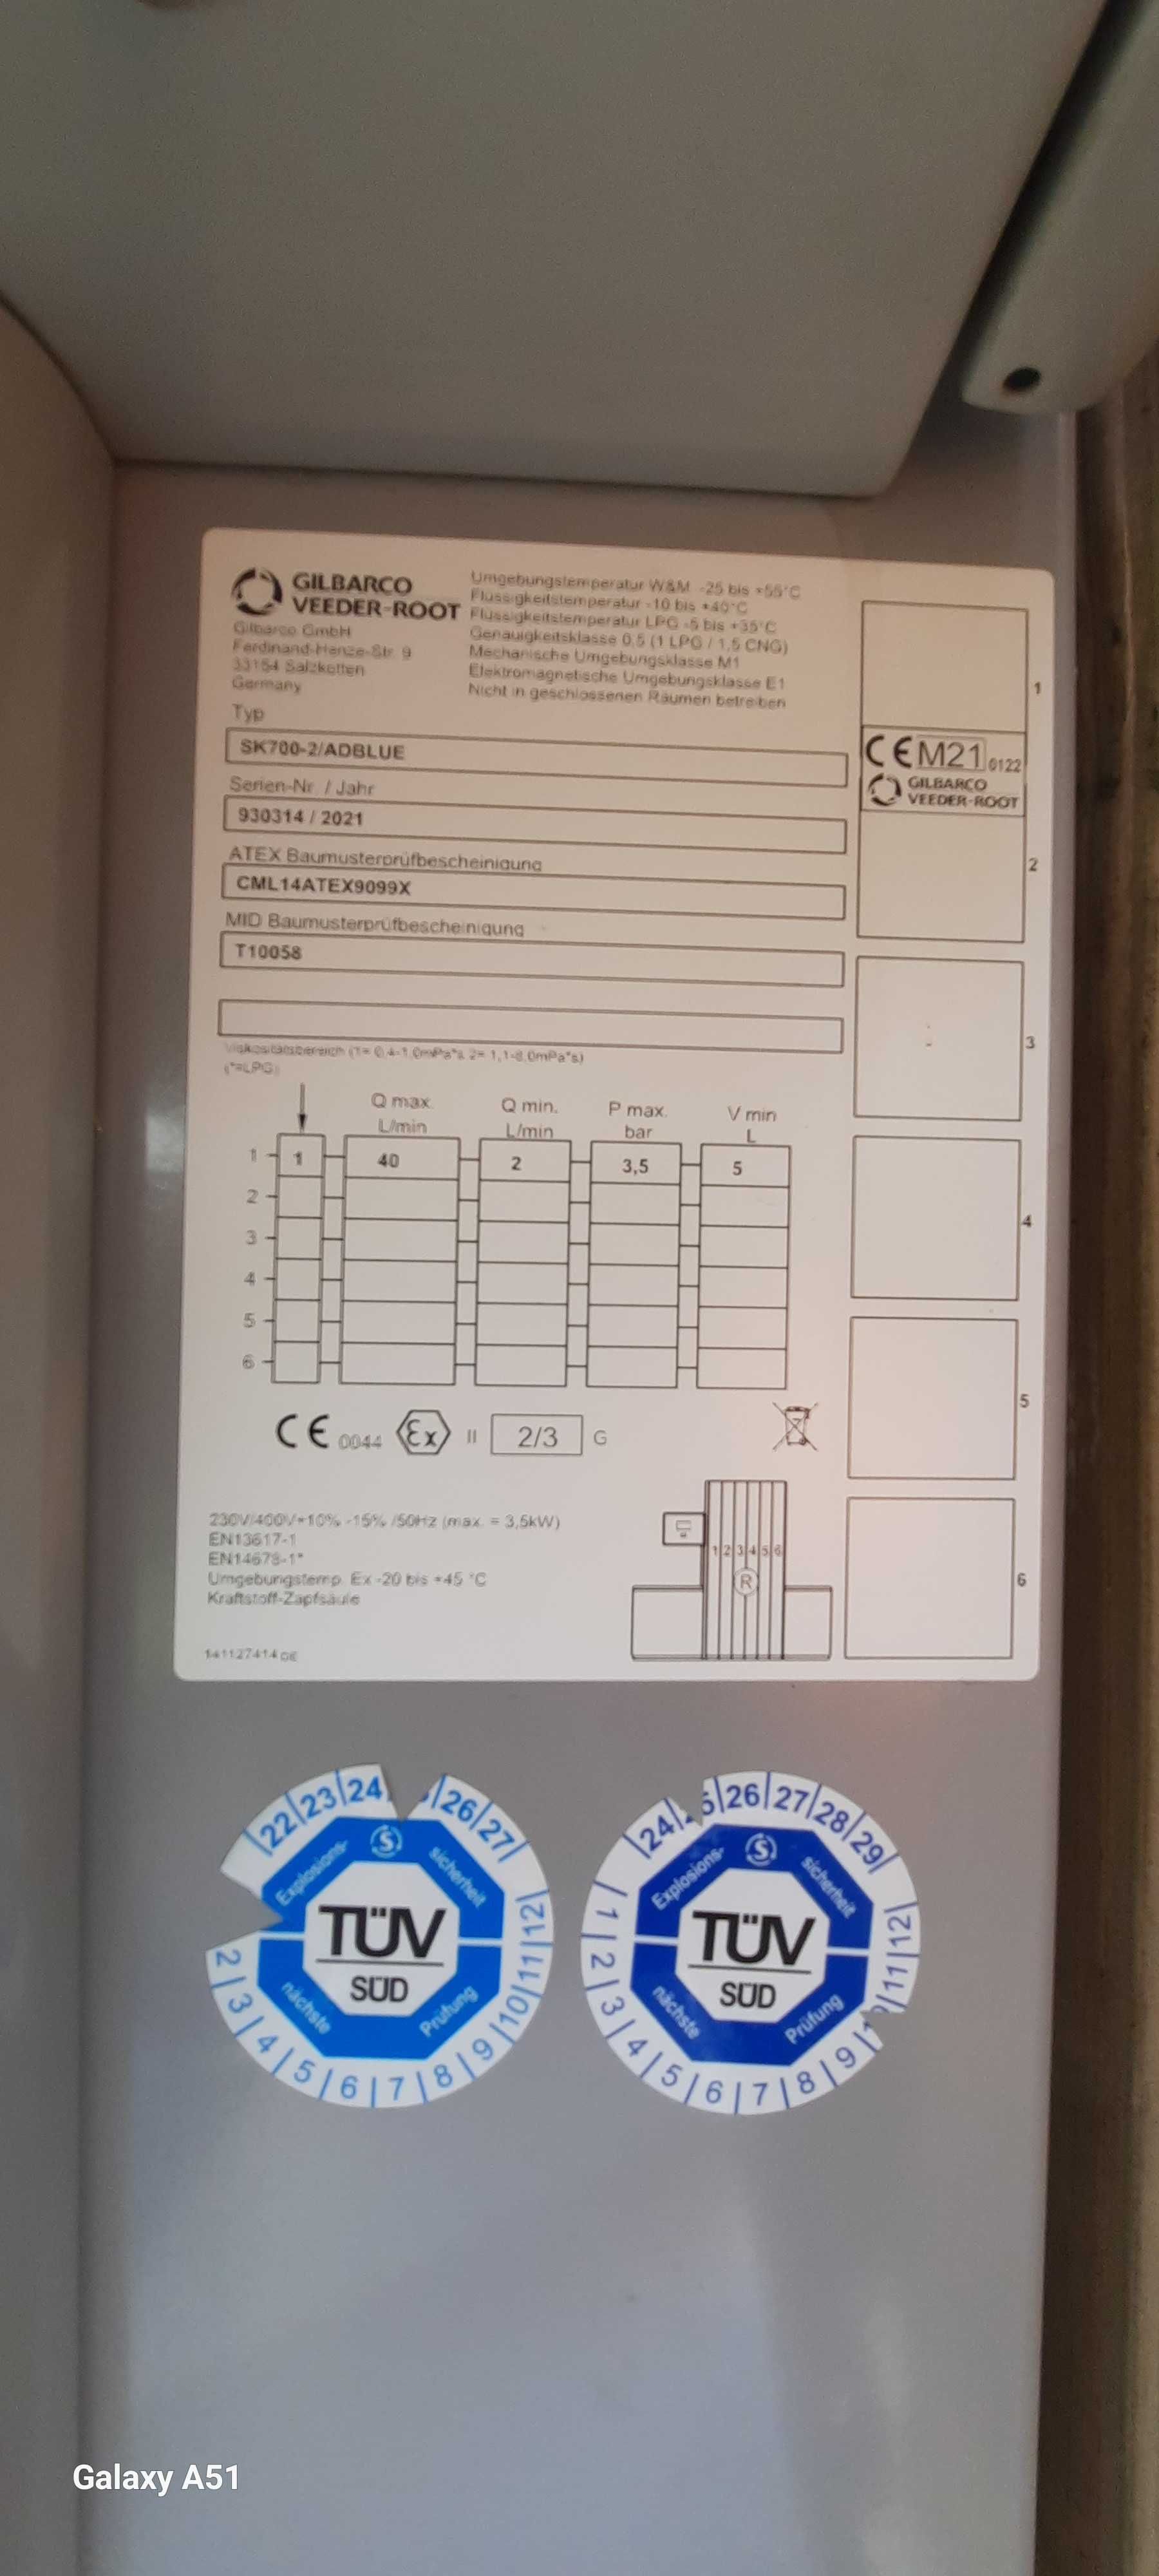 Gilbarco SK700-2 Adblue pompa/distribuitor adblue statie peco